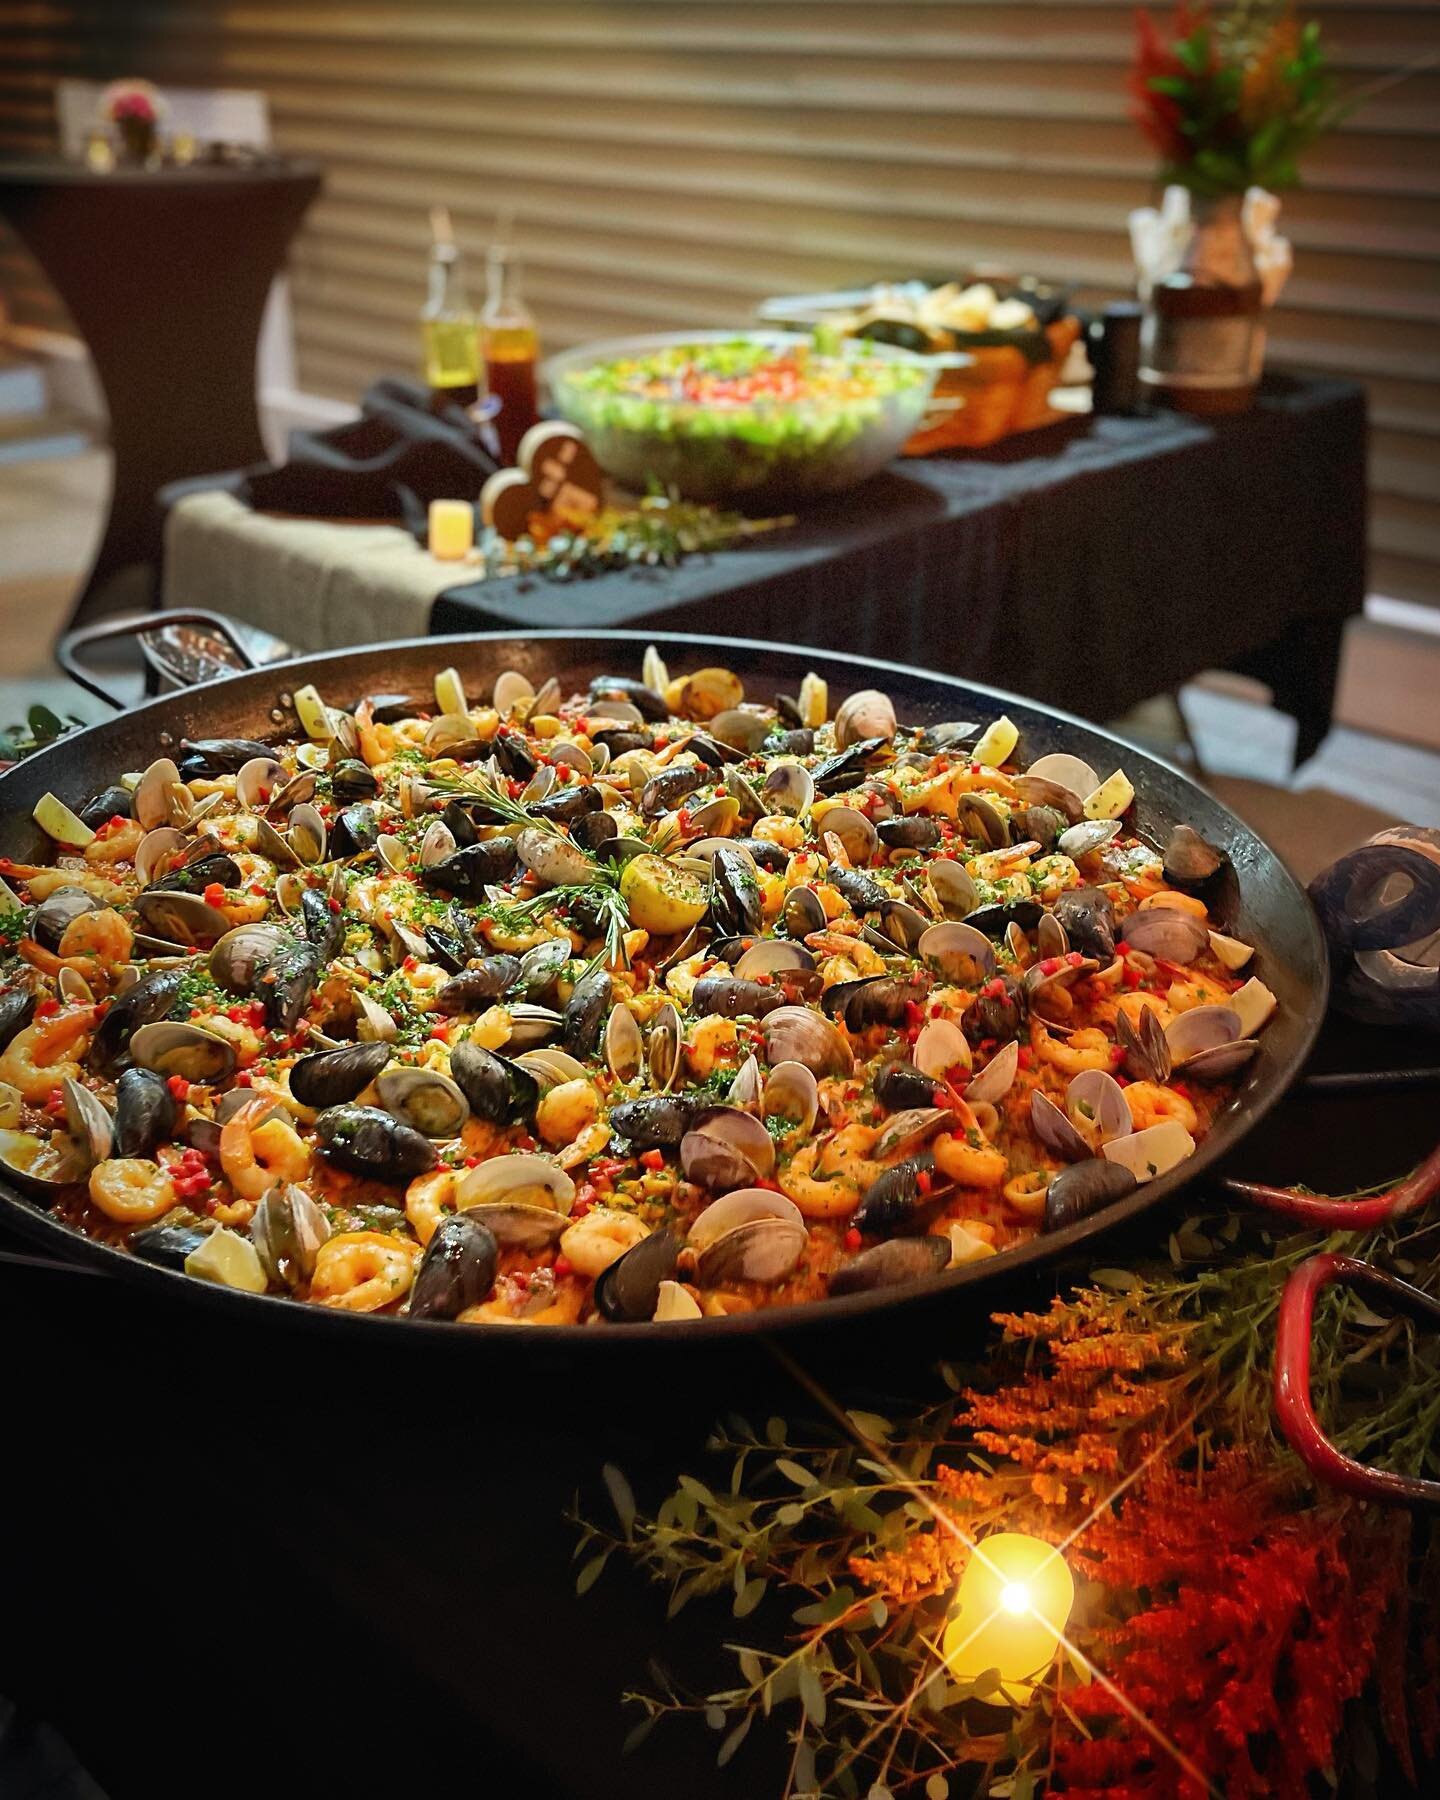 Cozy nights and paella 🍁✨🧑&zwj;🍳🔥🥘🥂 - cheers! #paella #fallnights .
.
.
.
.
.
#fall #delicious #party #wedding #weddings #partyfood #partyideas #weddingfood #foodie #chef #cheflife #spanishfood #gourmet #rusticfood